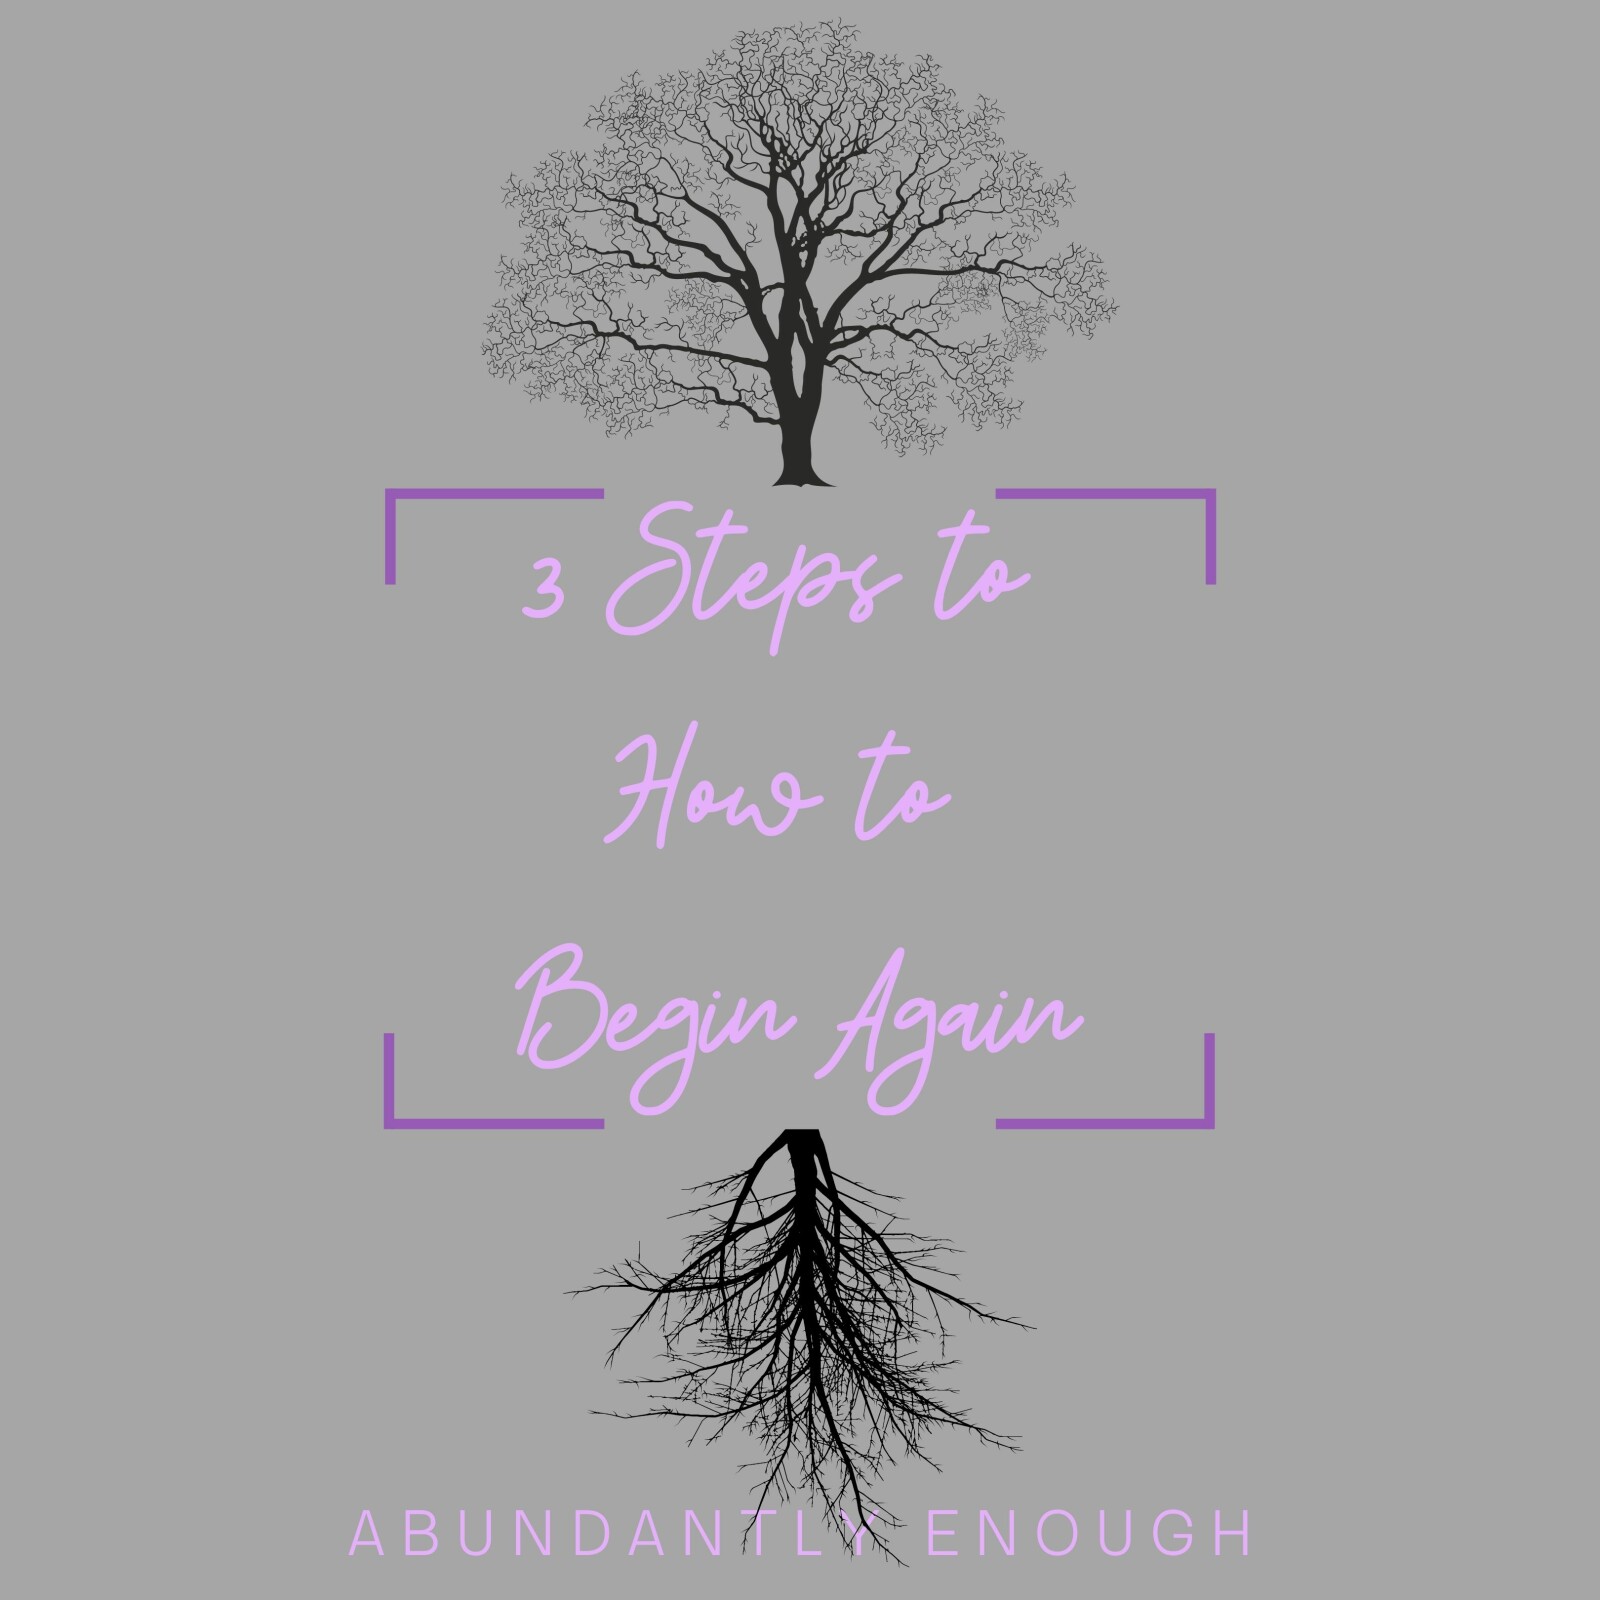  How to Begin Again.  Part 3 - Trust